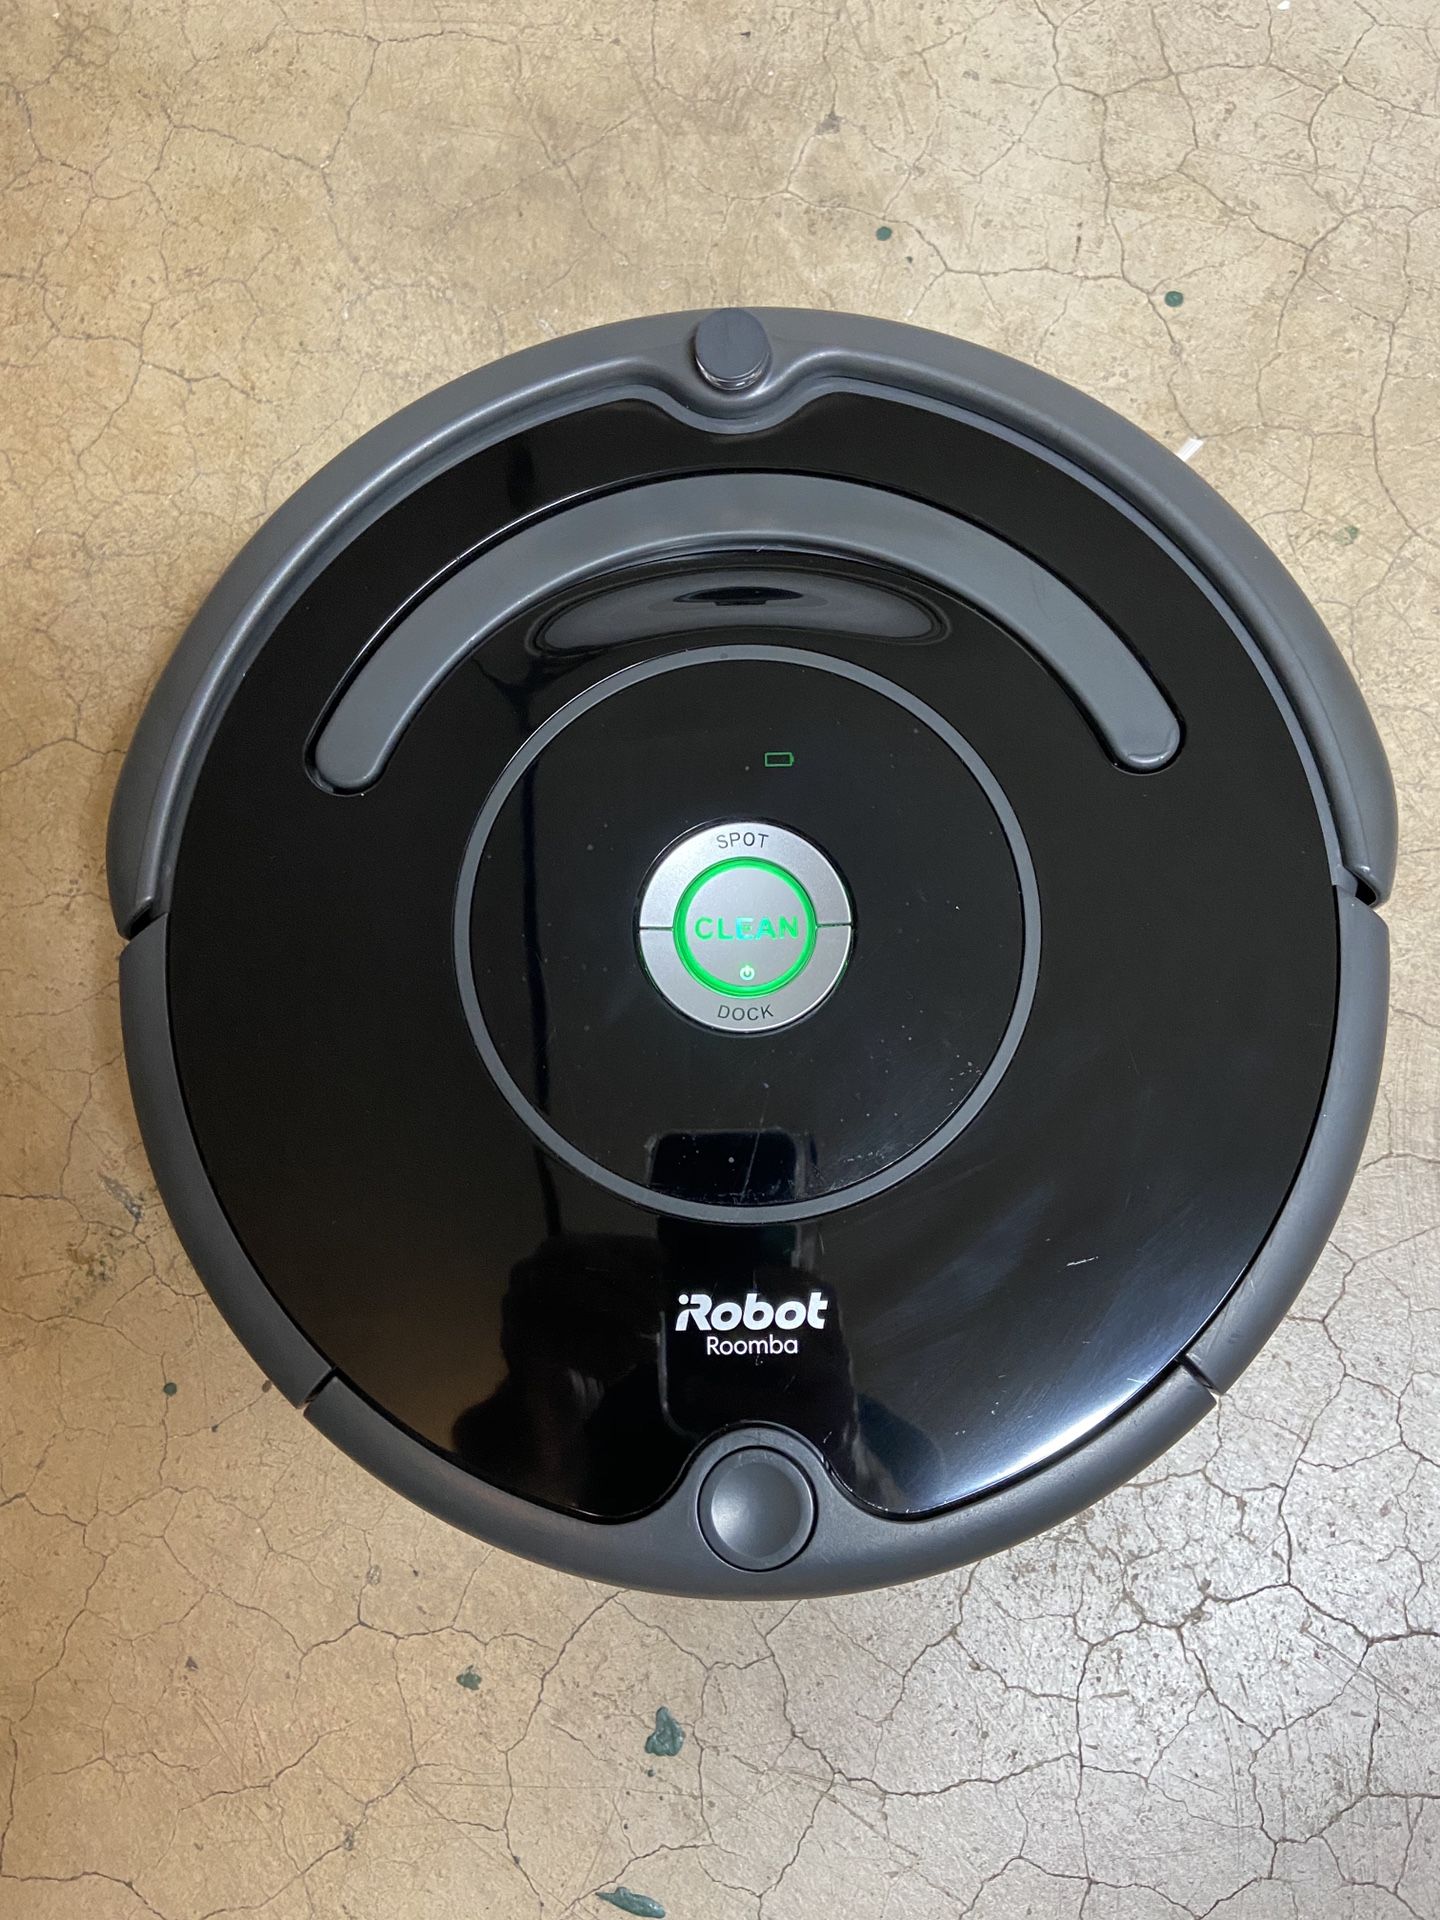 iRobot Roomba 675 Robot Vacuum-Wi-Fi Connectivity, Works with Alexa, Good for Pet Hair, Carpets, Hard Floors, Self-Charging Robotic